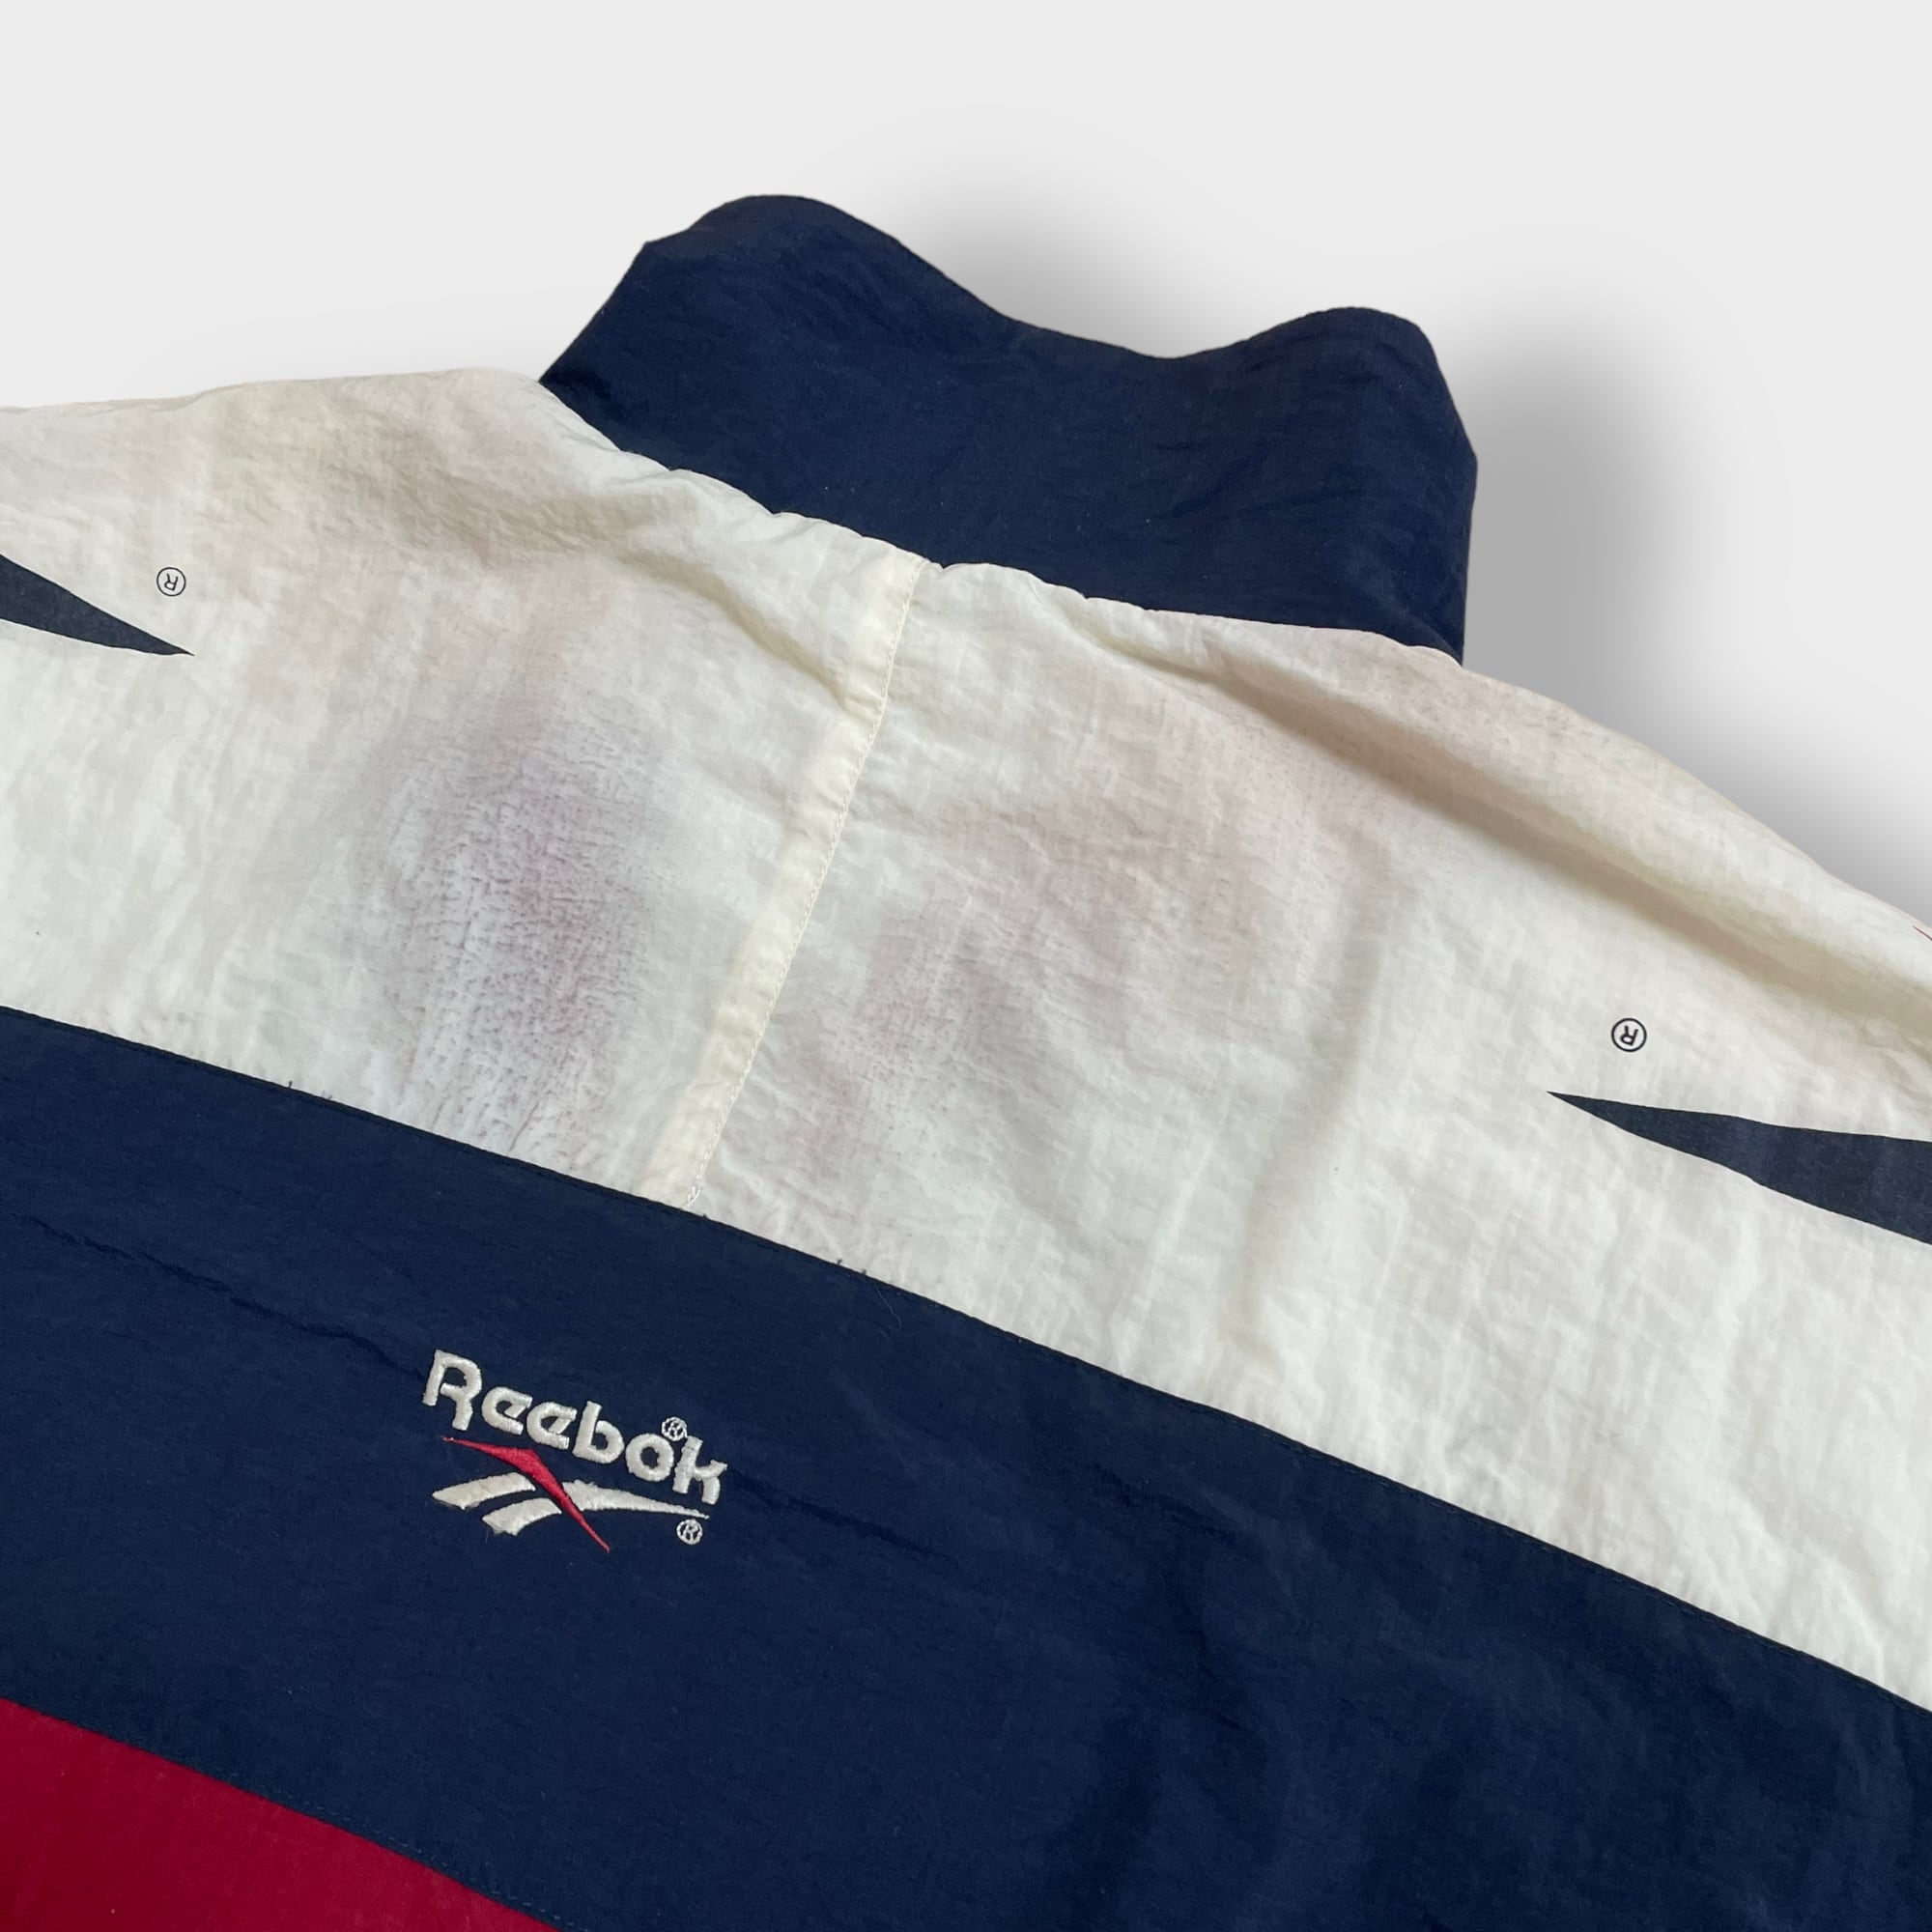 Reebok】90s ナイロンジャケット ブルゾン 刺繍ロゴ 袖ロゴ フルジップ